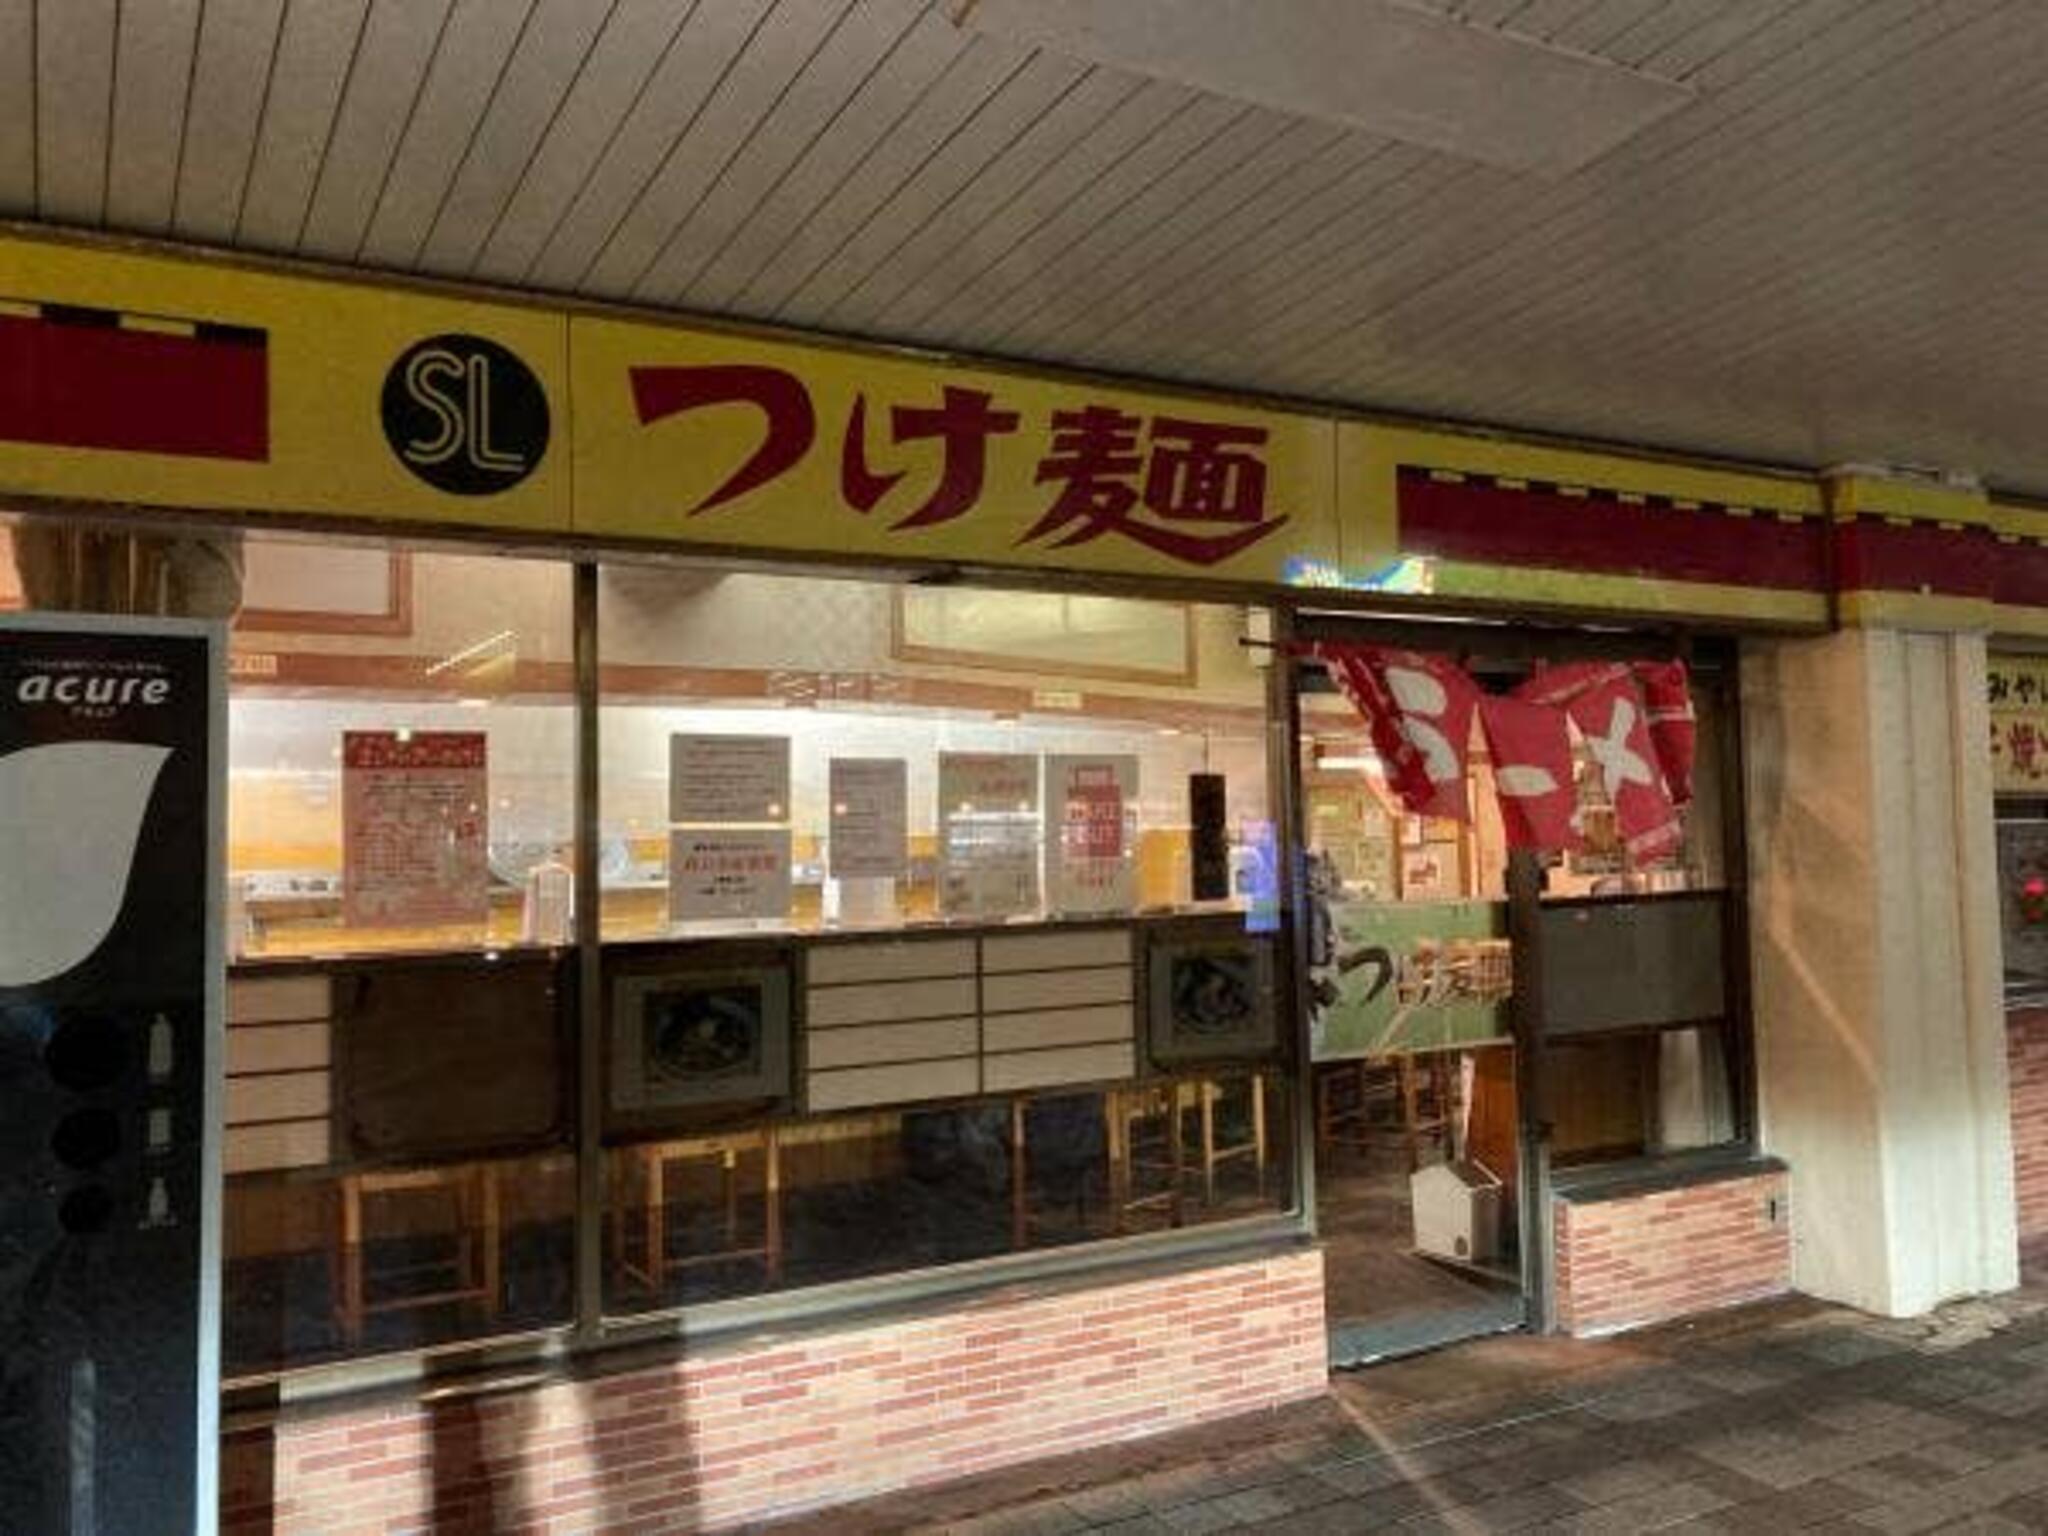 SL中華つけ麺 木更津西口店の代表写真2